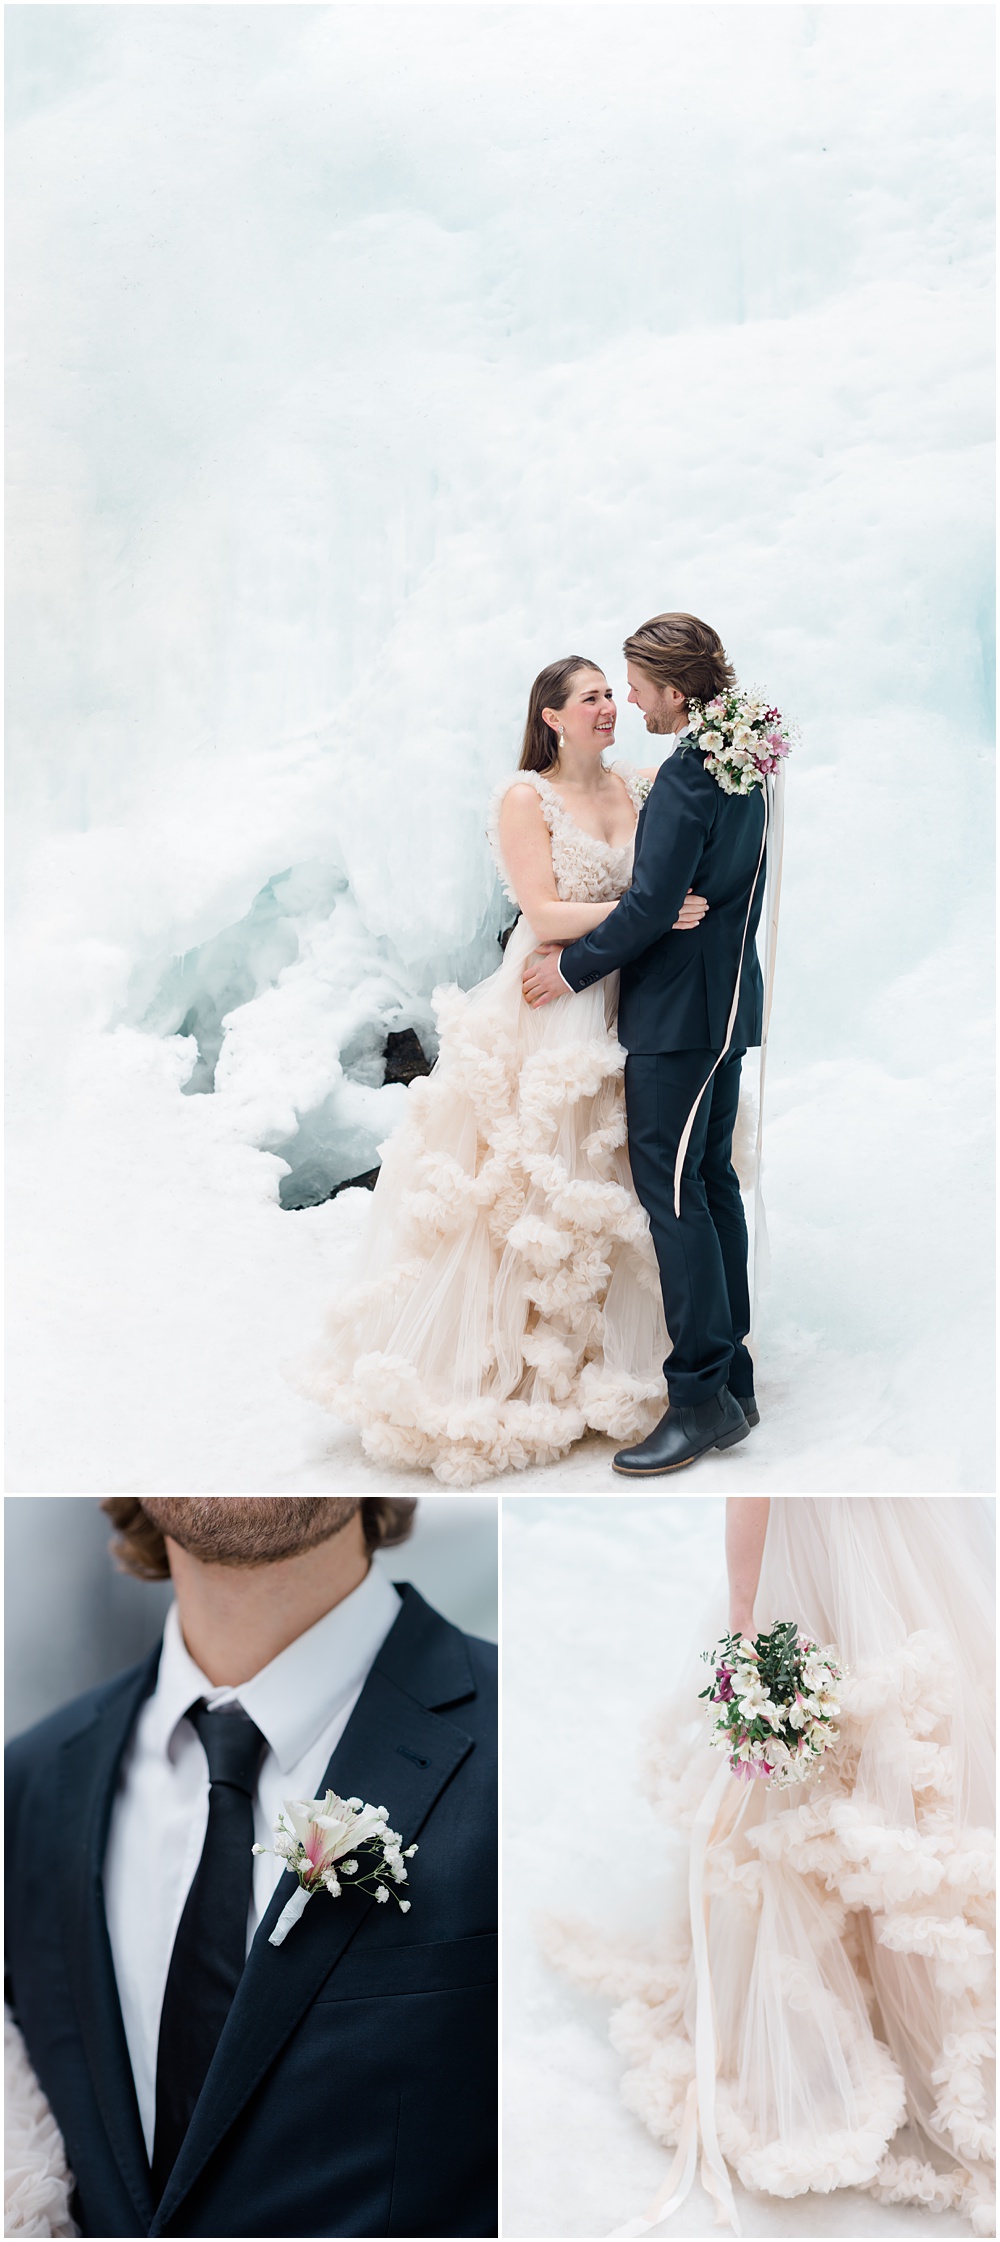 Winter wedding inspiration snow and ice helloalora